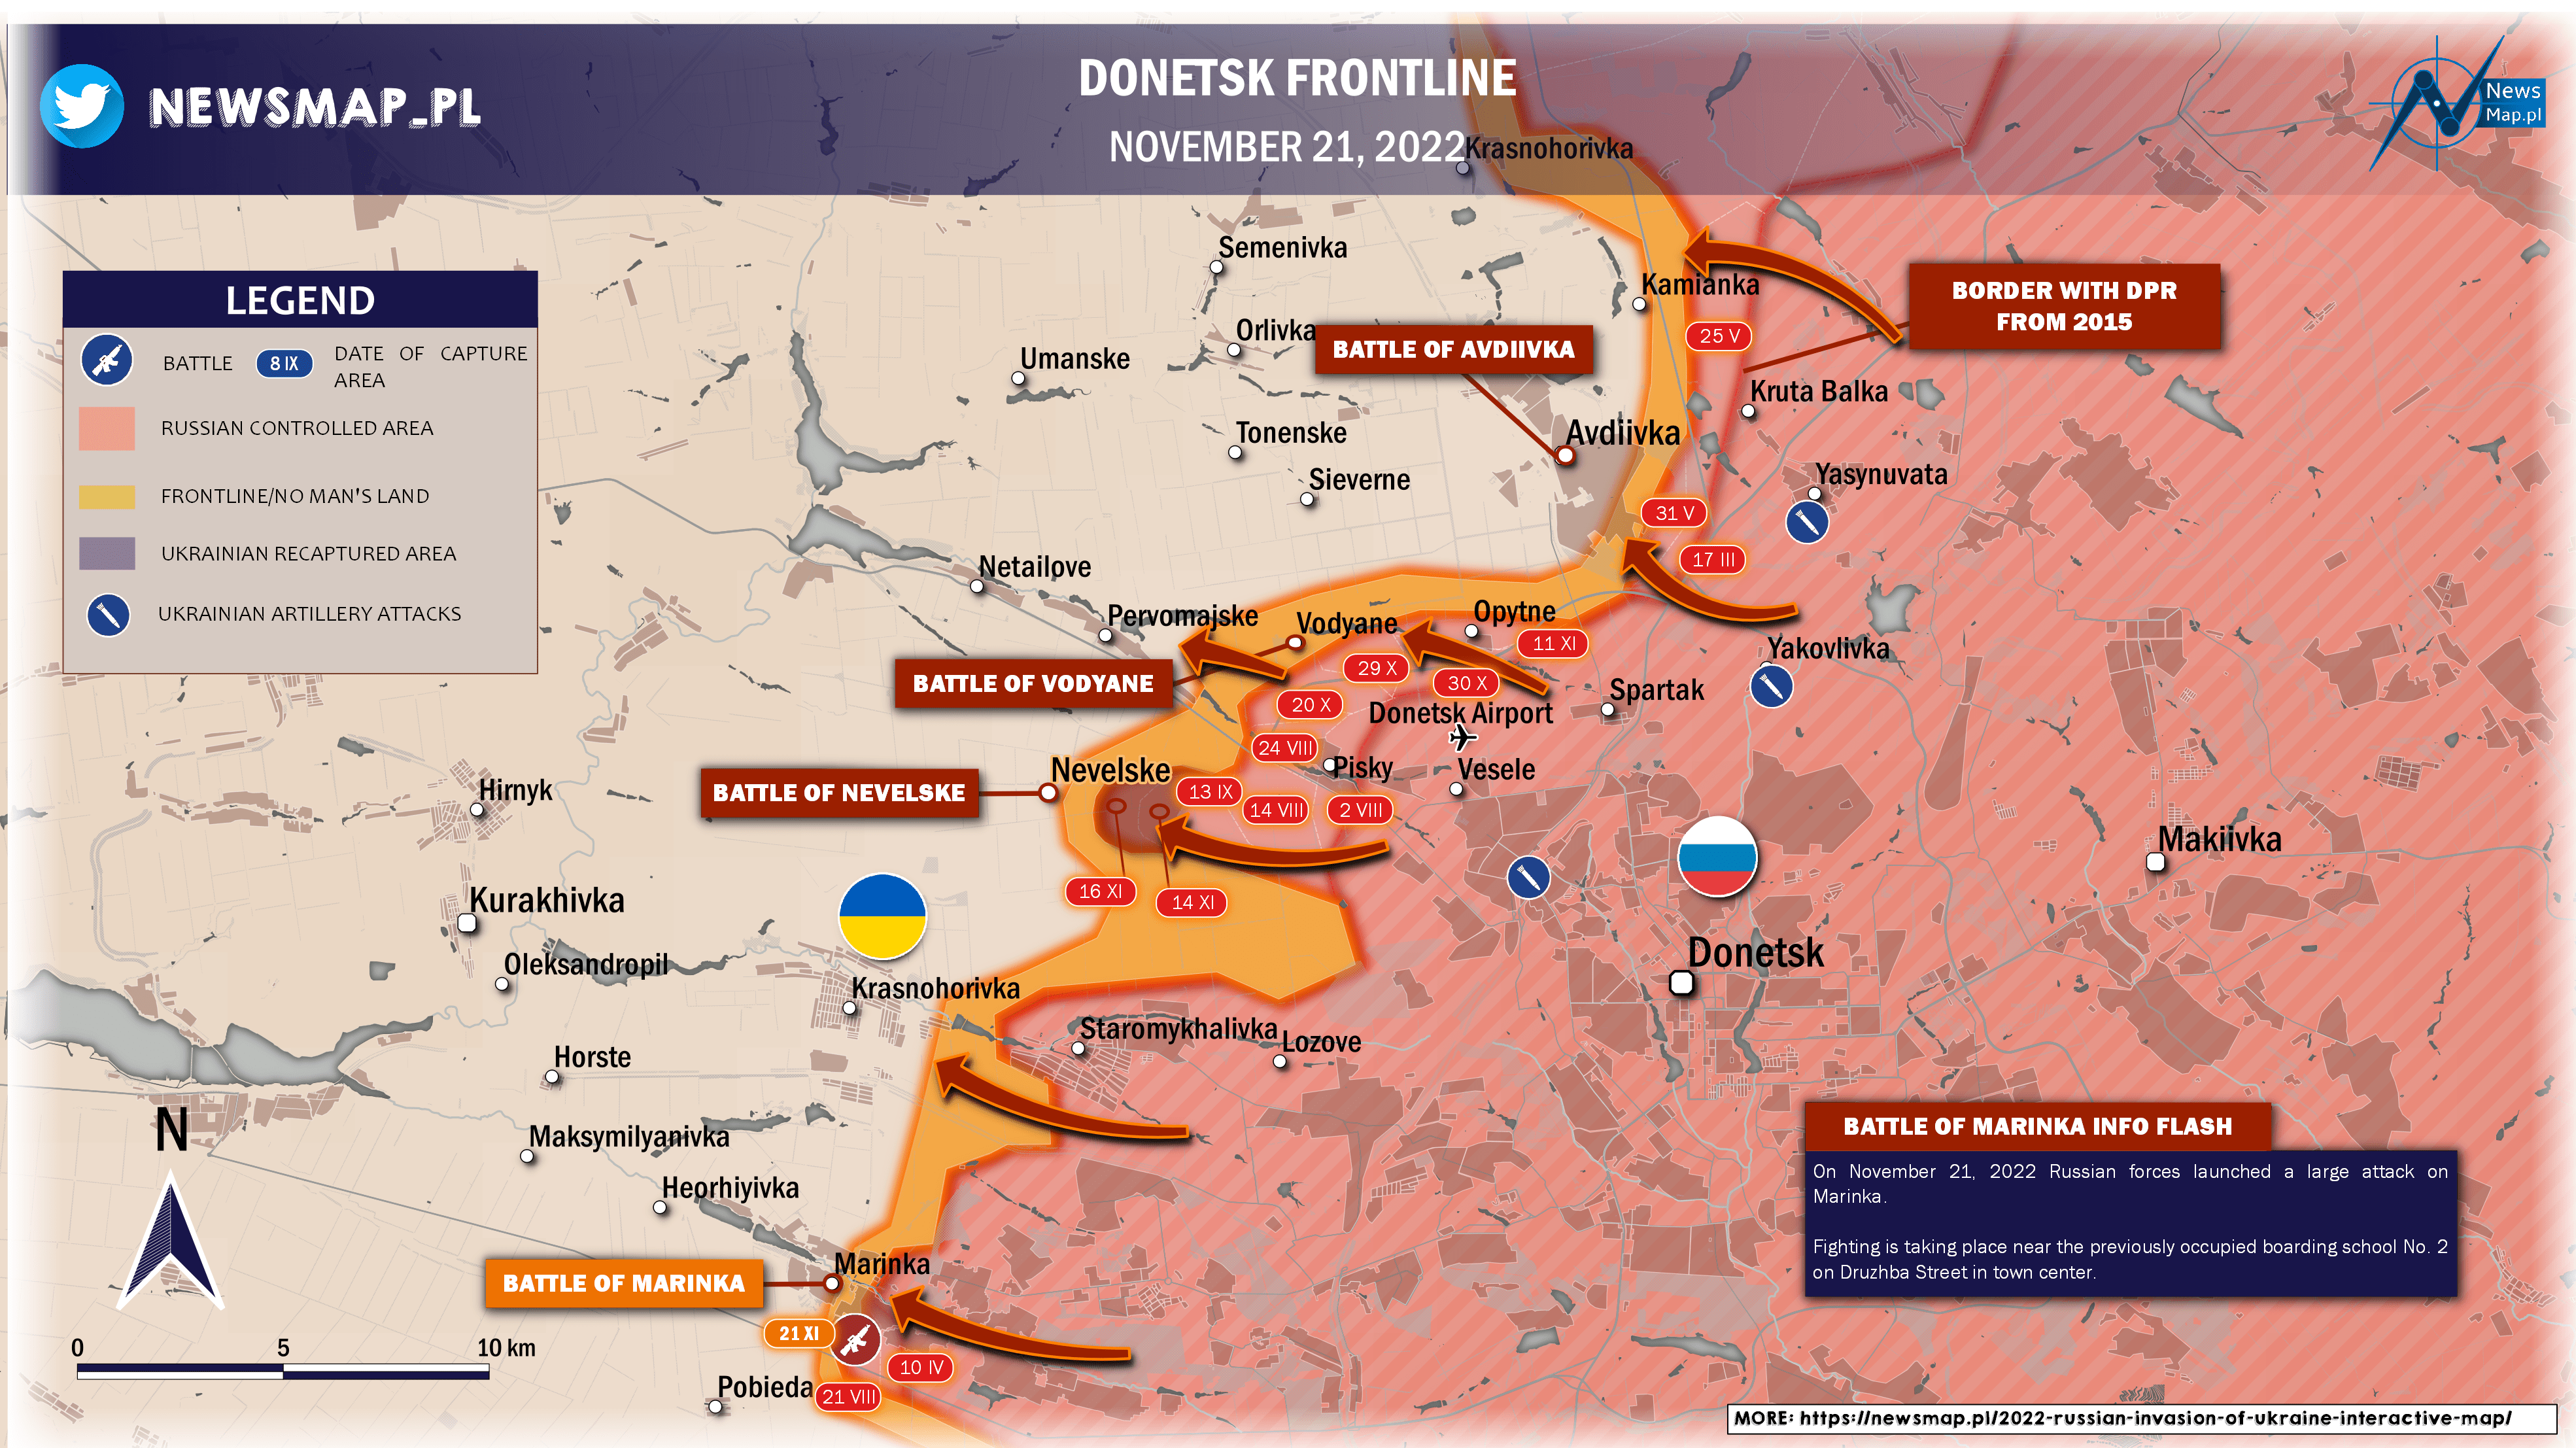 Donetsk frontline (21 XI 2022)